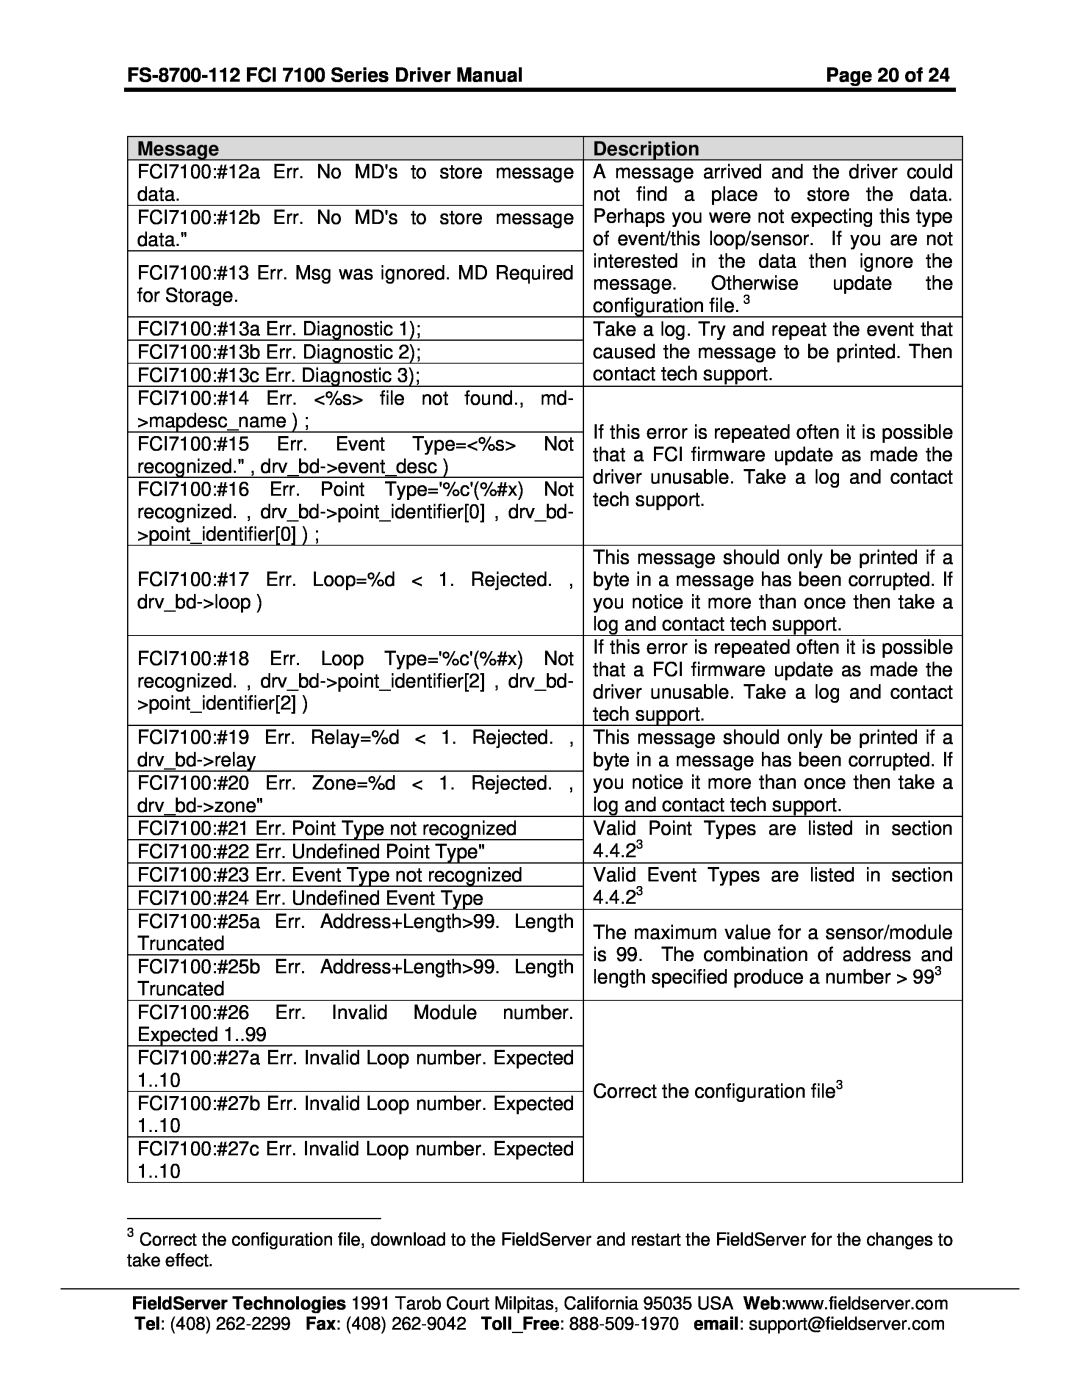 FieldServer instruction manual Page 20 of, FS-8700-112 FCI 7100 Series Driver Manual, Message, Description 